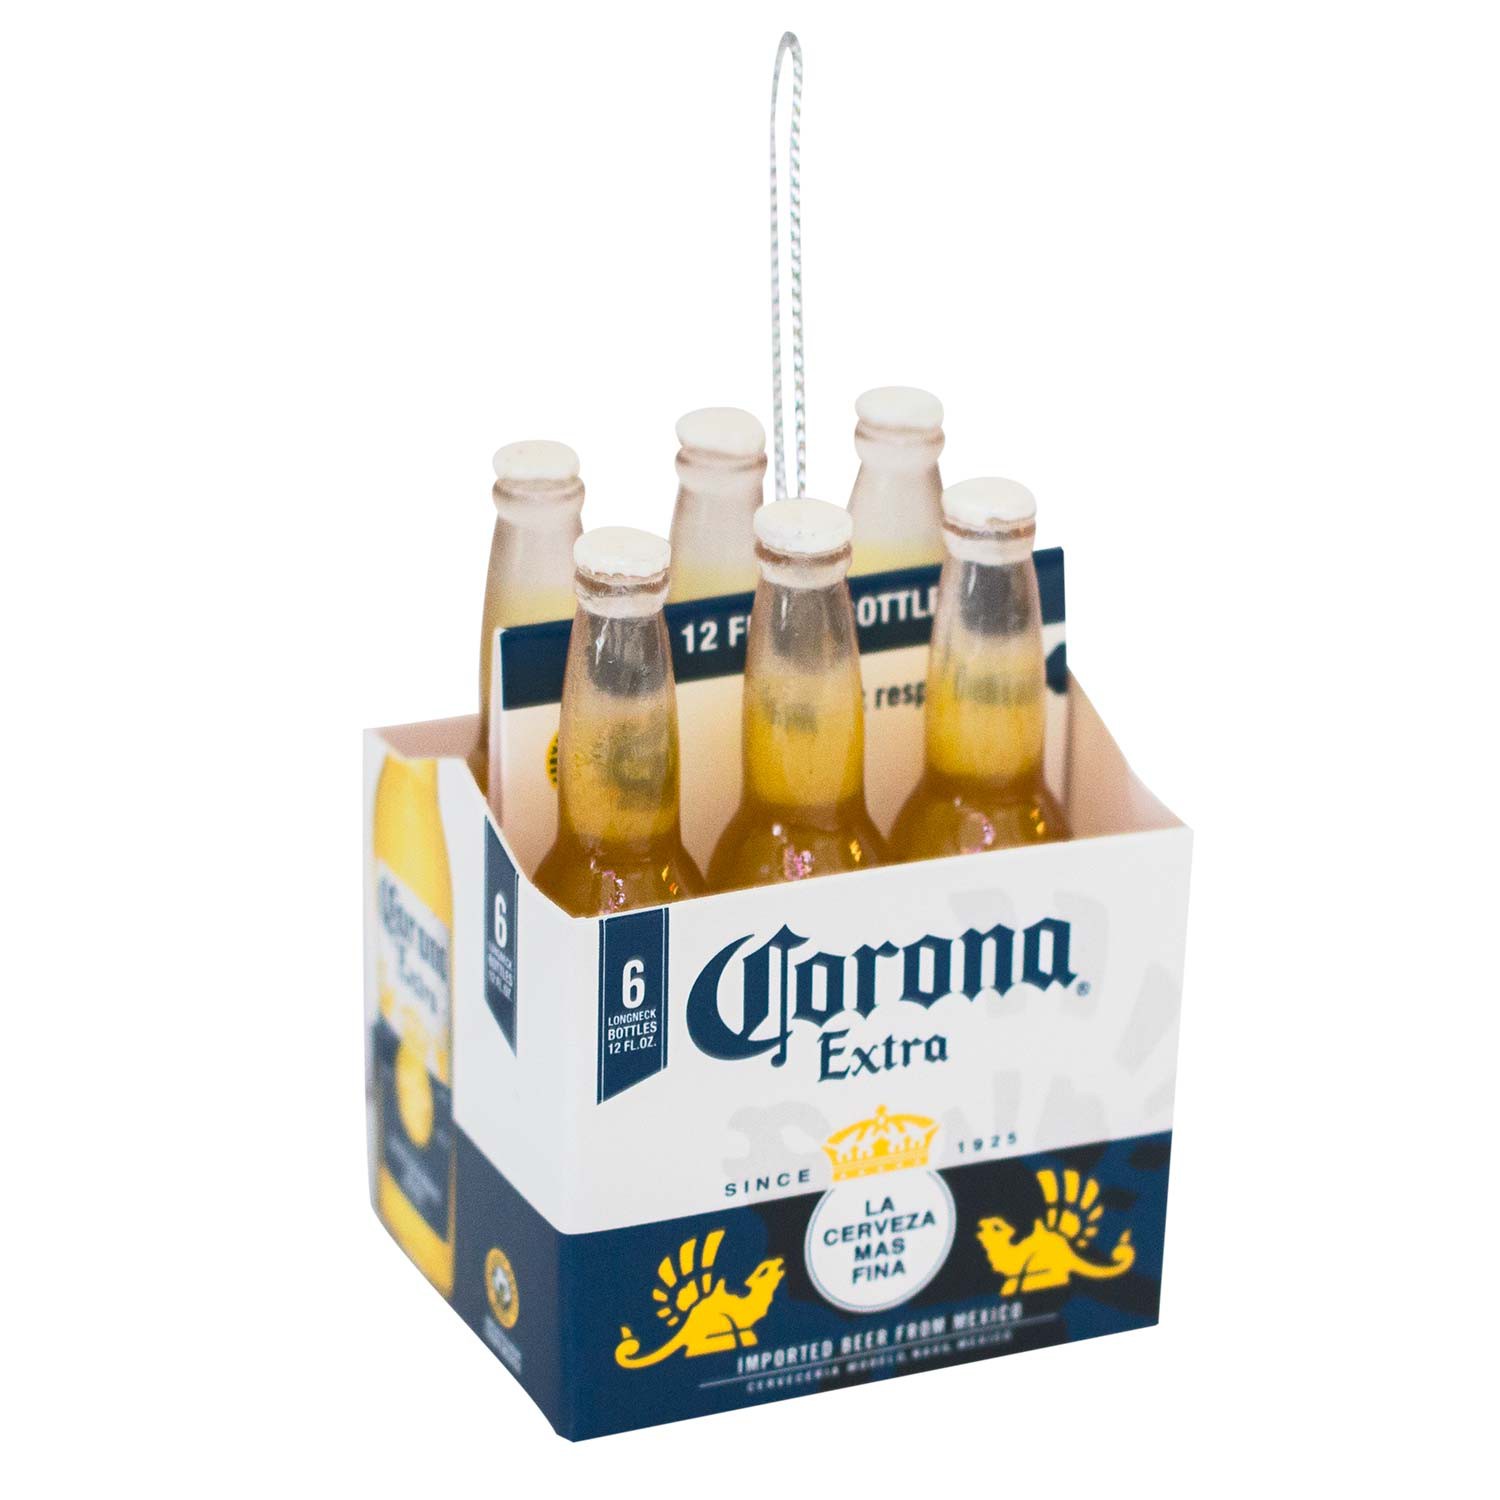 Corona Extra Bottle Six Pack Ornament